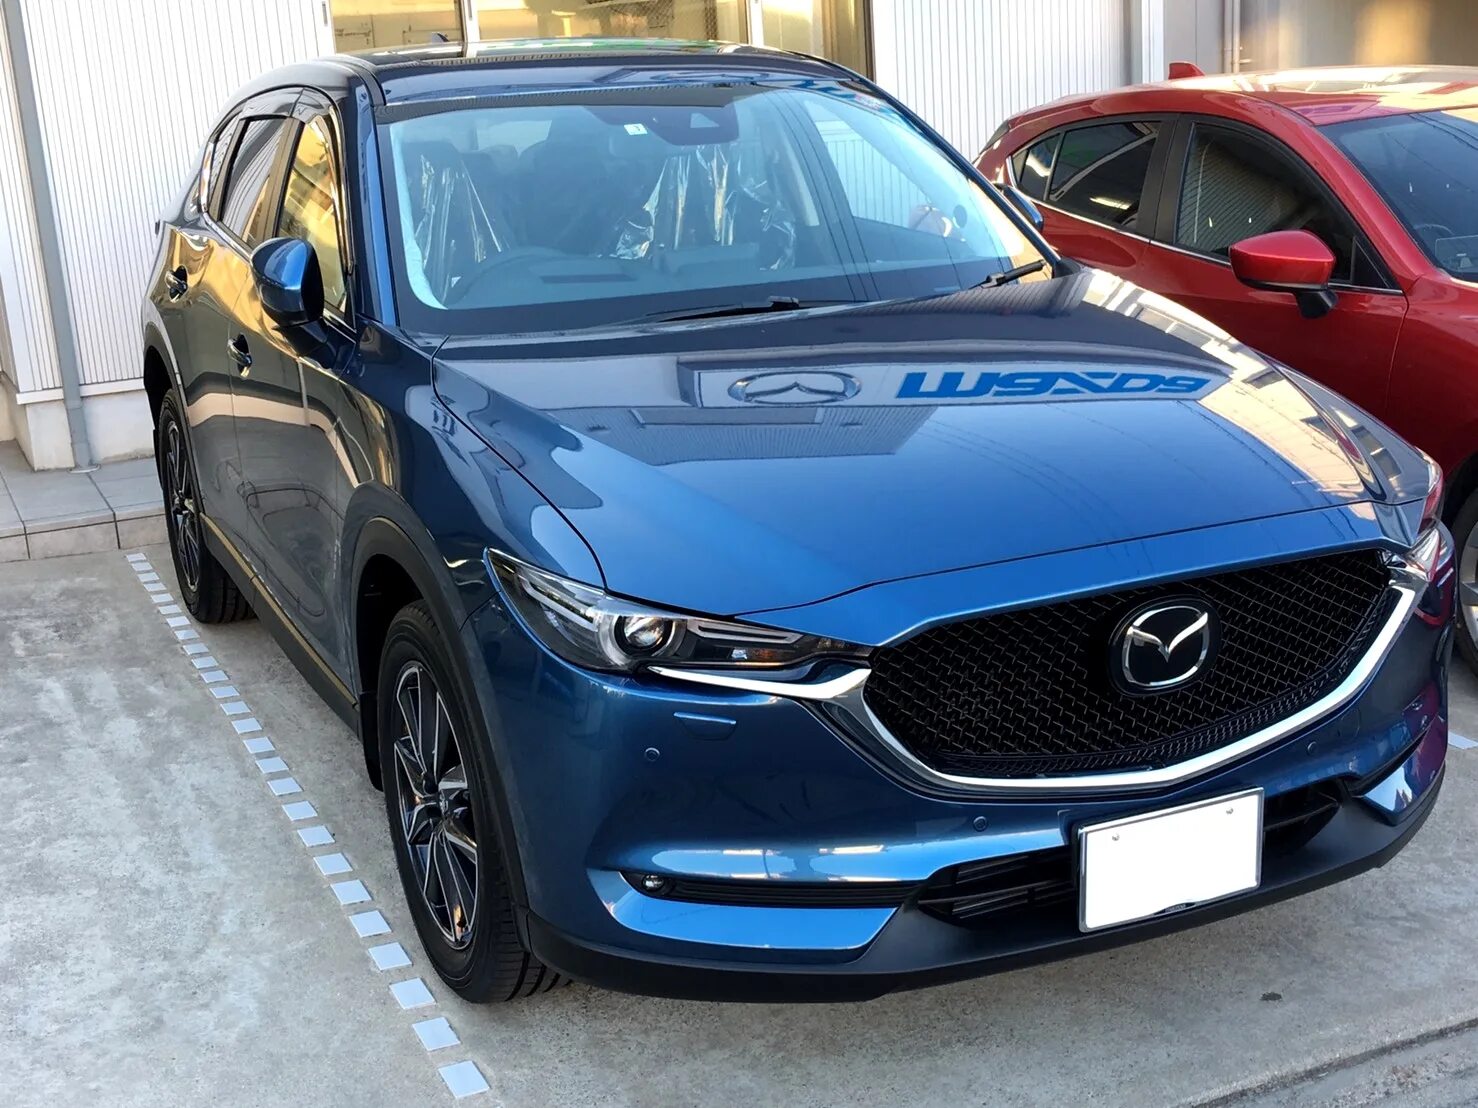 Mazda CX-5 2017 Eternal Blue. Мазда CX 5 Eternal Blue. Eternal Blue Мазда СХ 5. Mazda CX 5 синяя. Цвета мазда сх